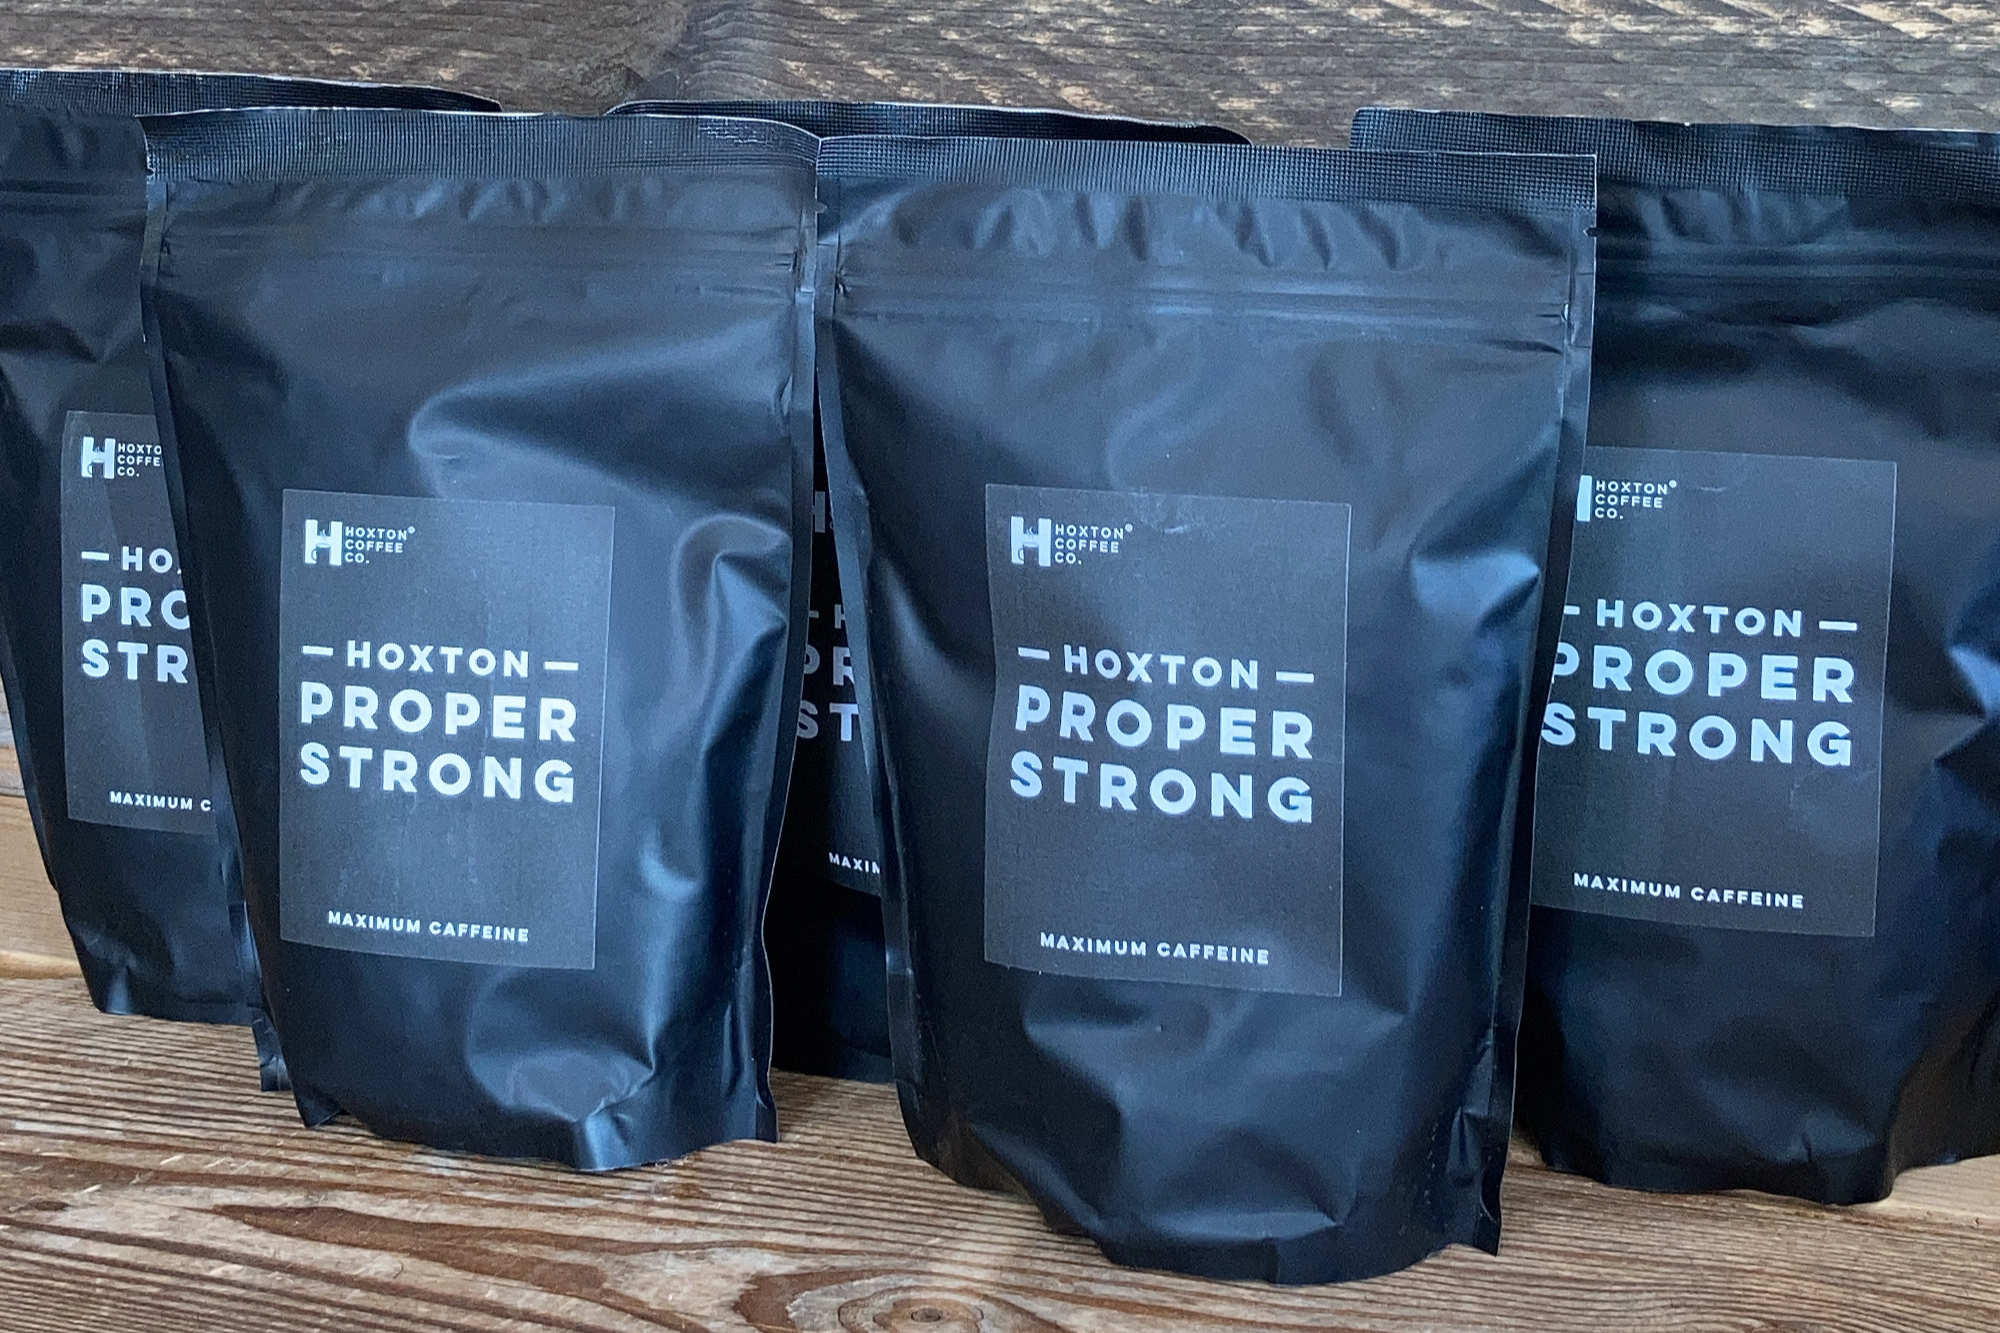 Hoxton Proper Strong Coffee maximum caffeine